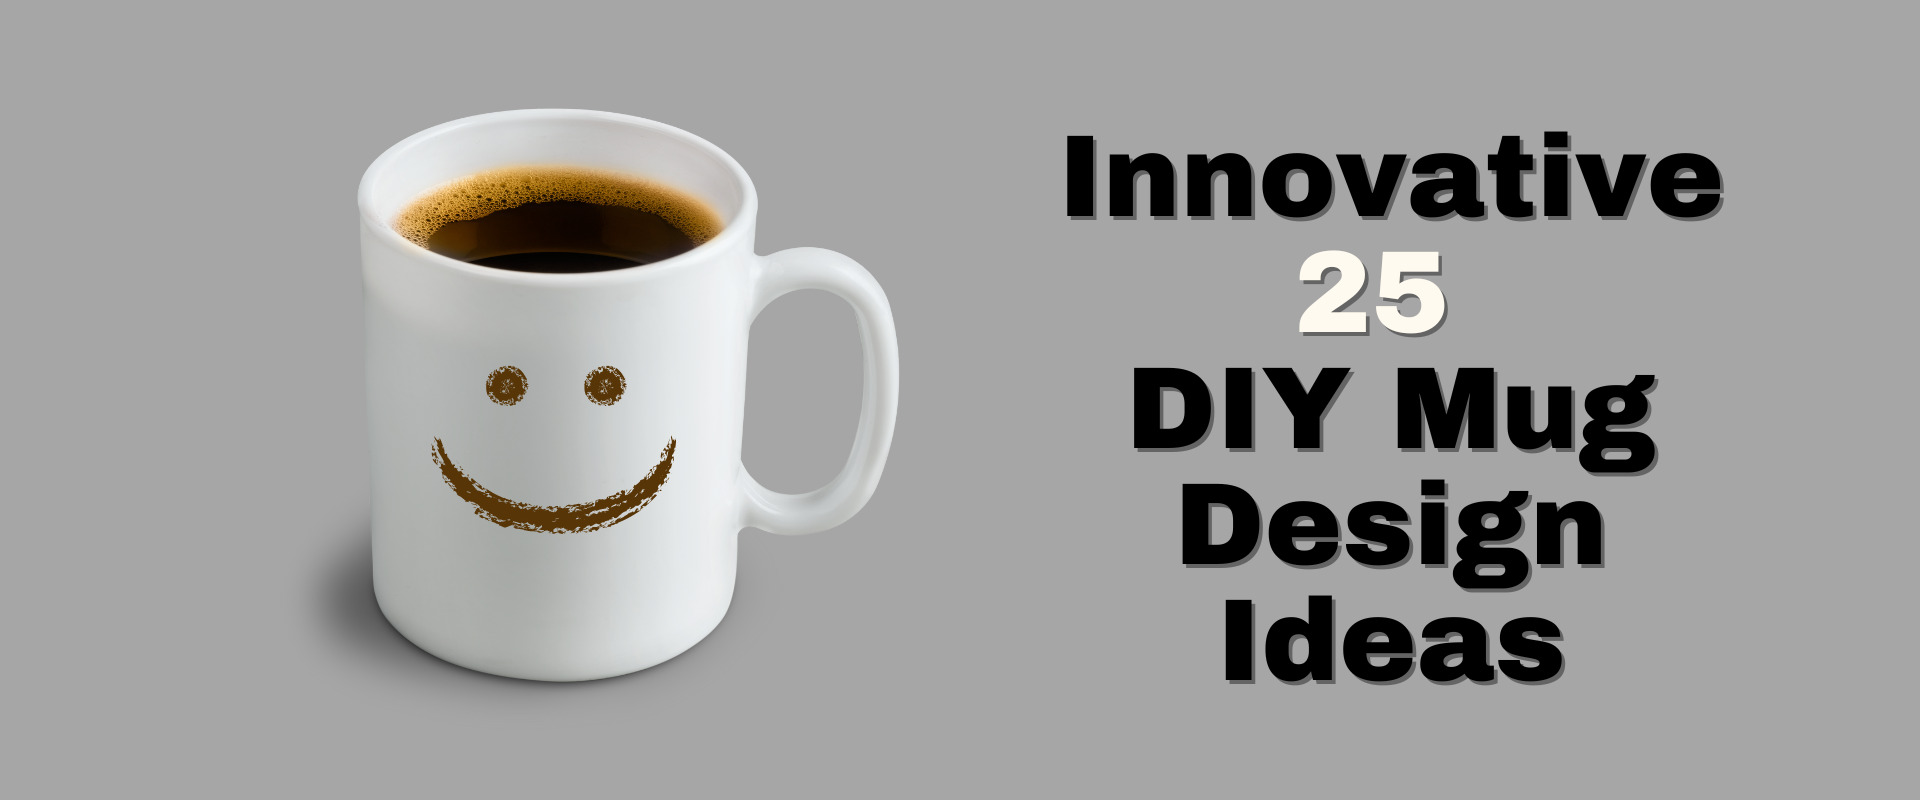 DIY Mug Design Ideas